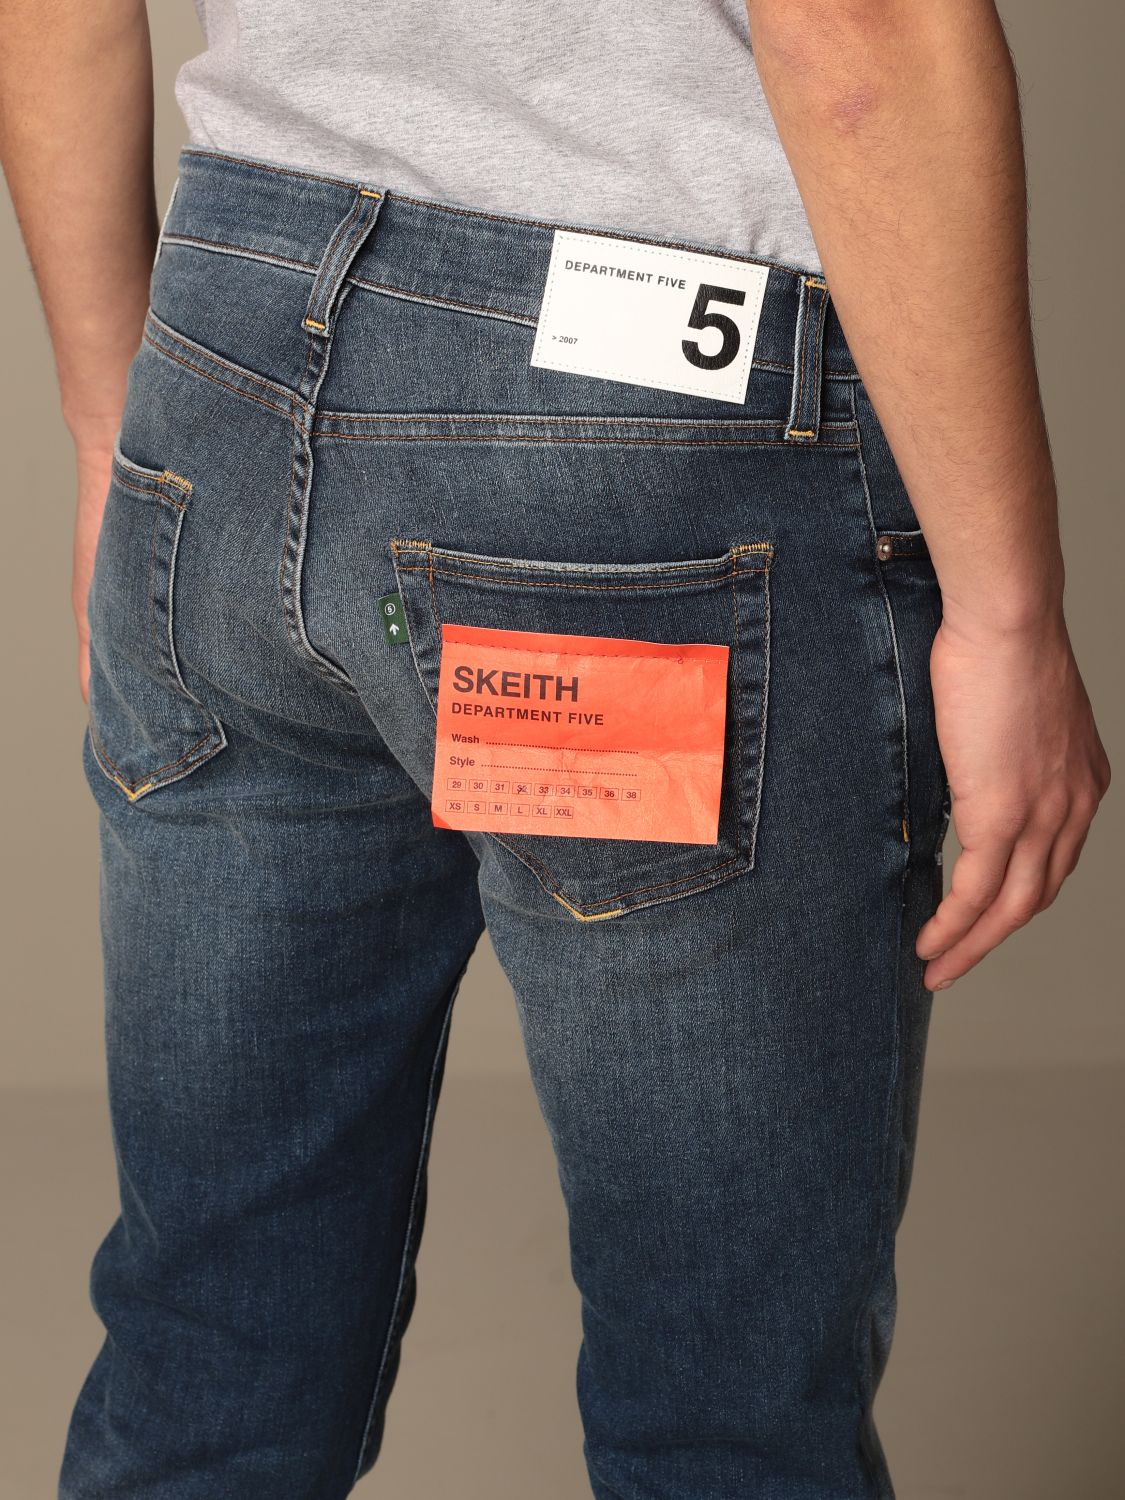 Jeans a 5 tasche Department Five